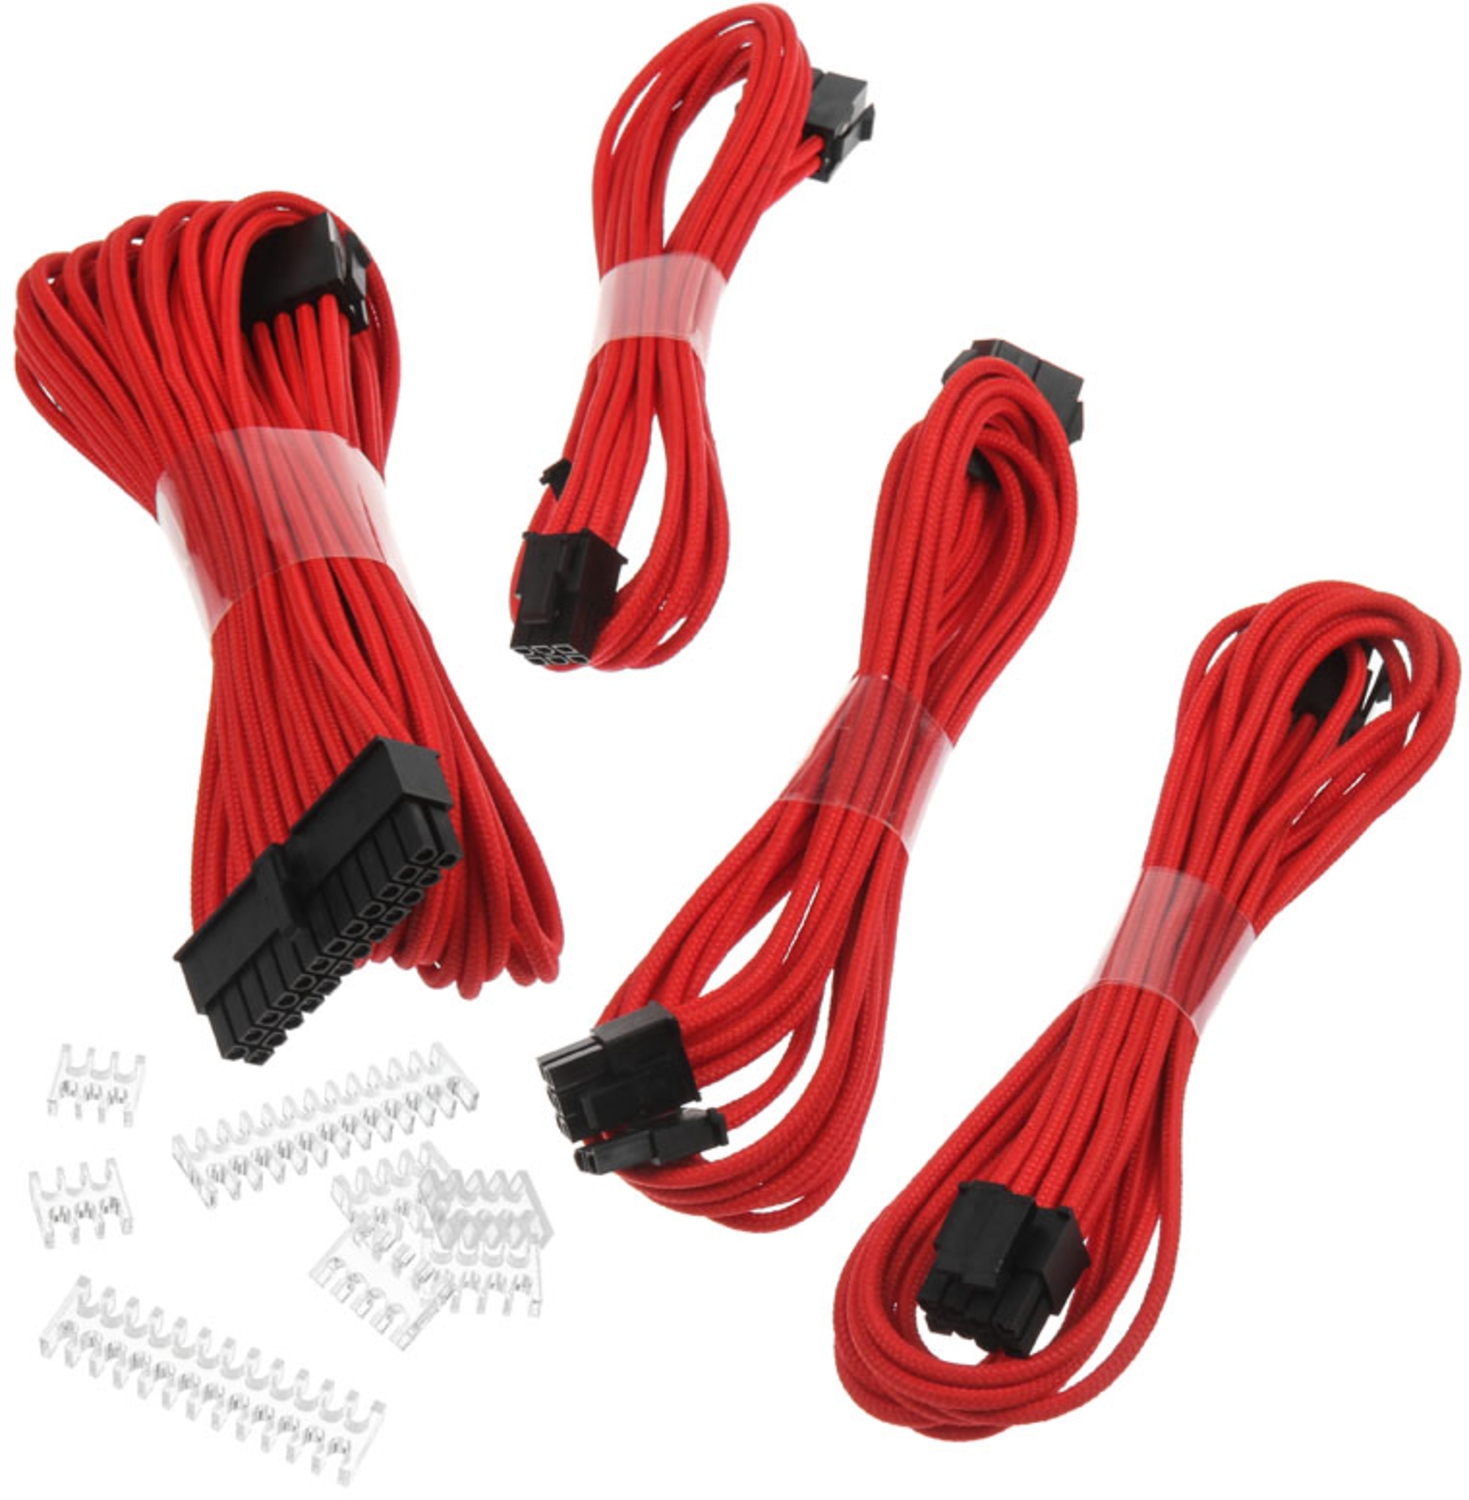 Kit de Expansión Phanteks Cables Sleeved 50cm Rojo